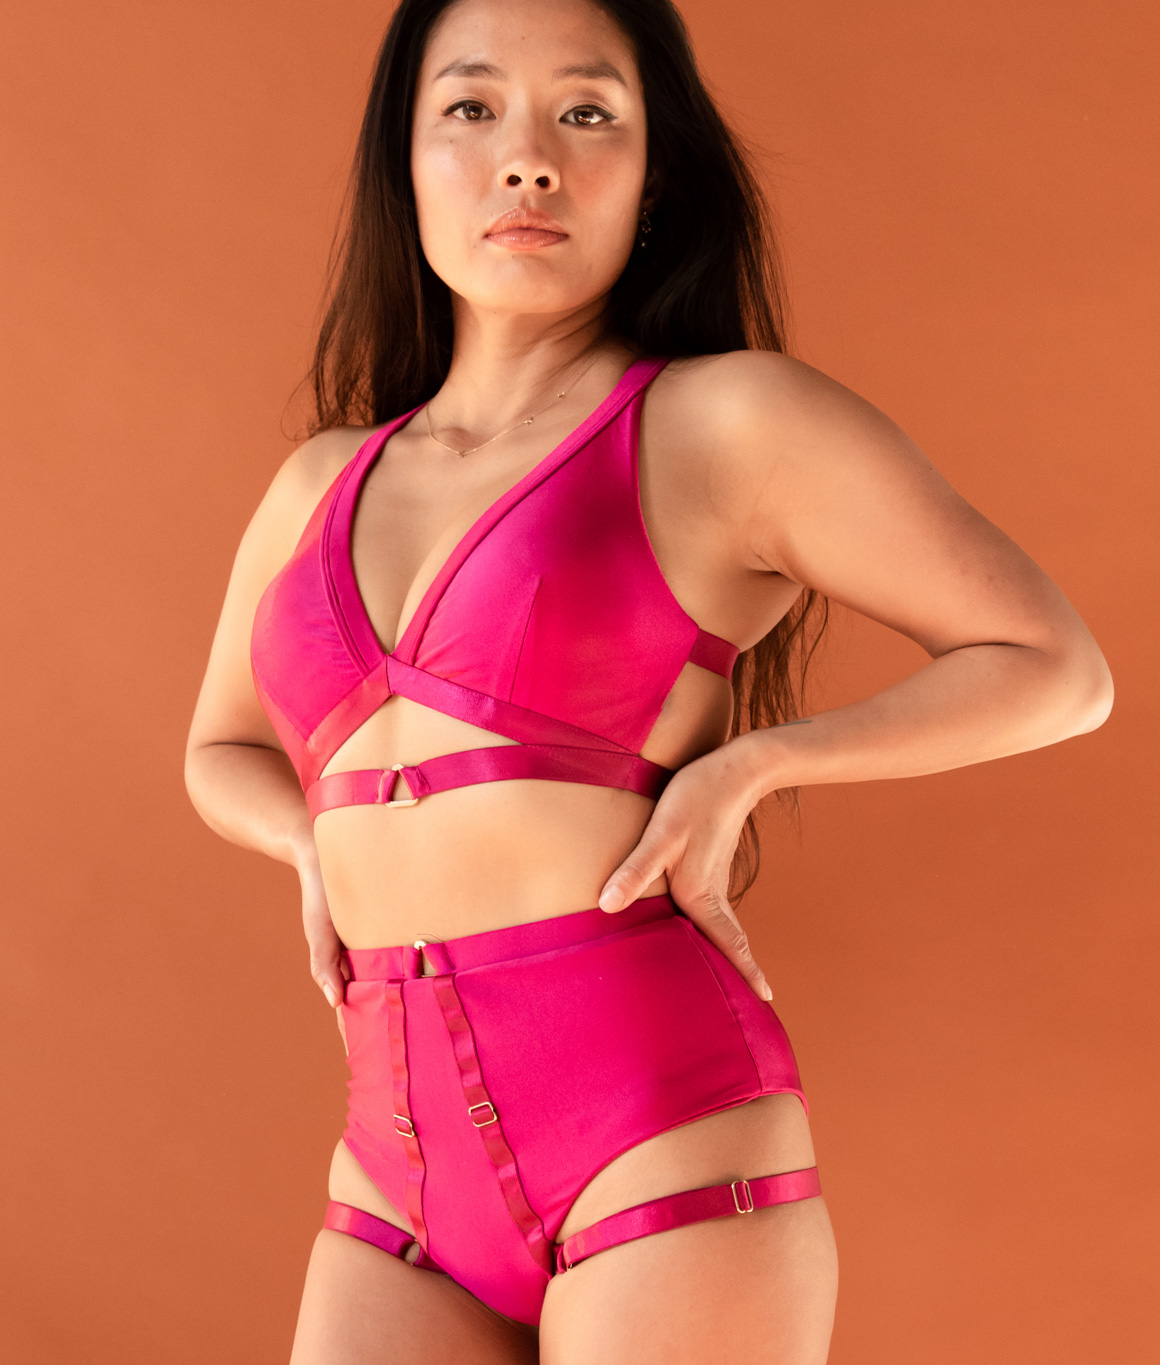 Tatiana Active - Tokio Fuchsia Hot Pink Strappy Garter Pole Wear-3211